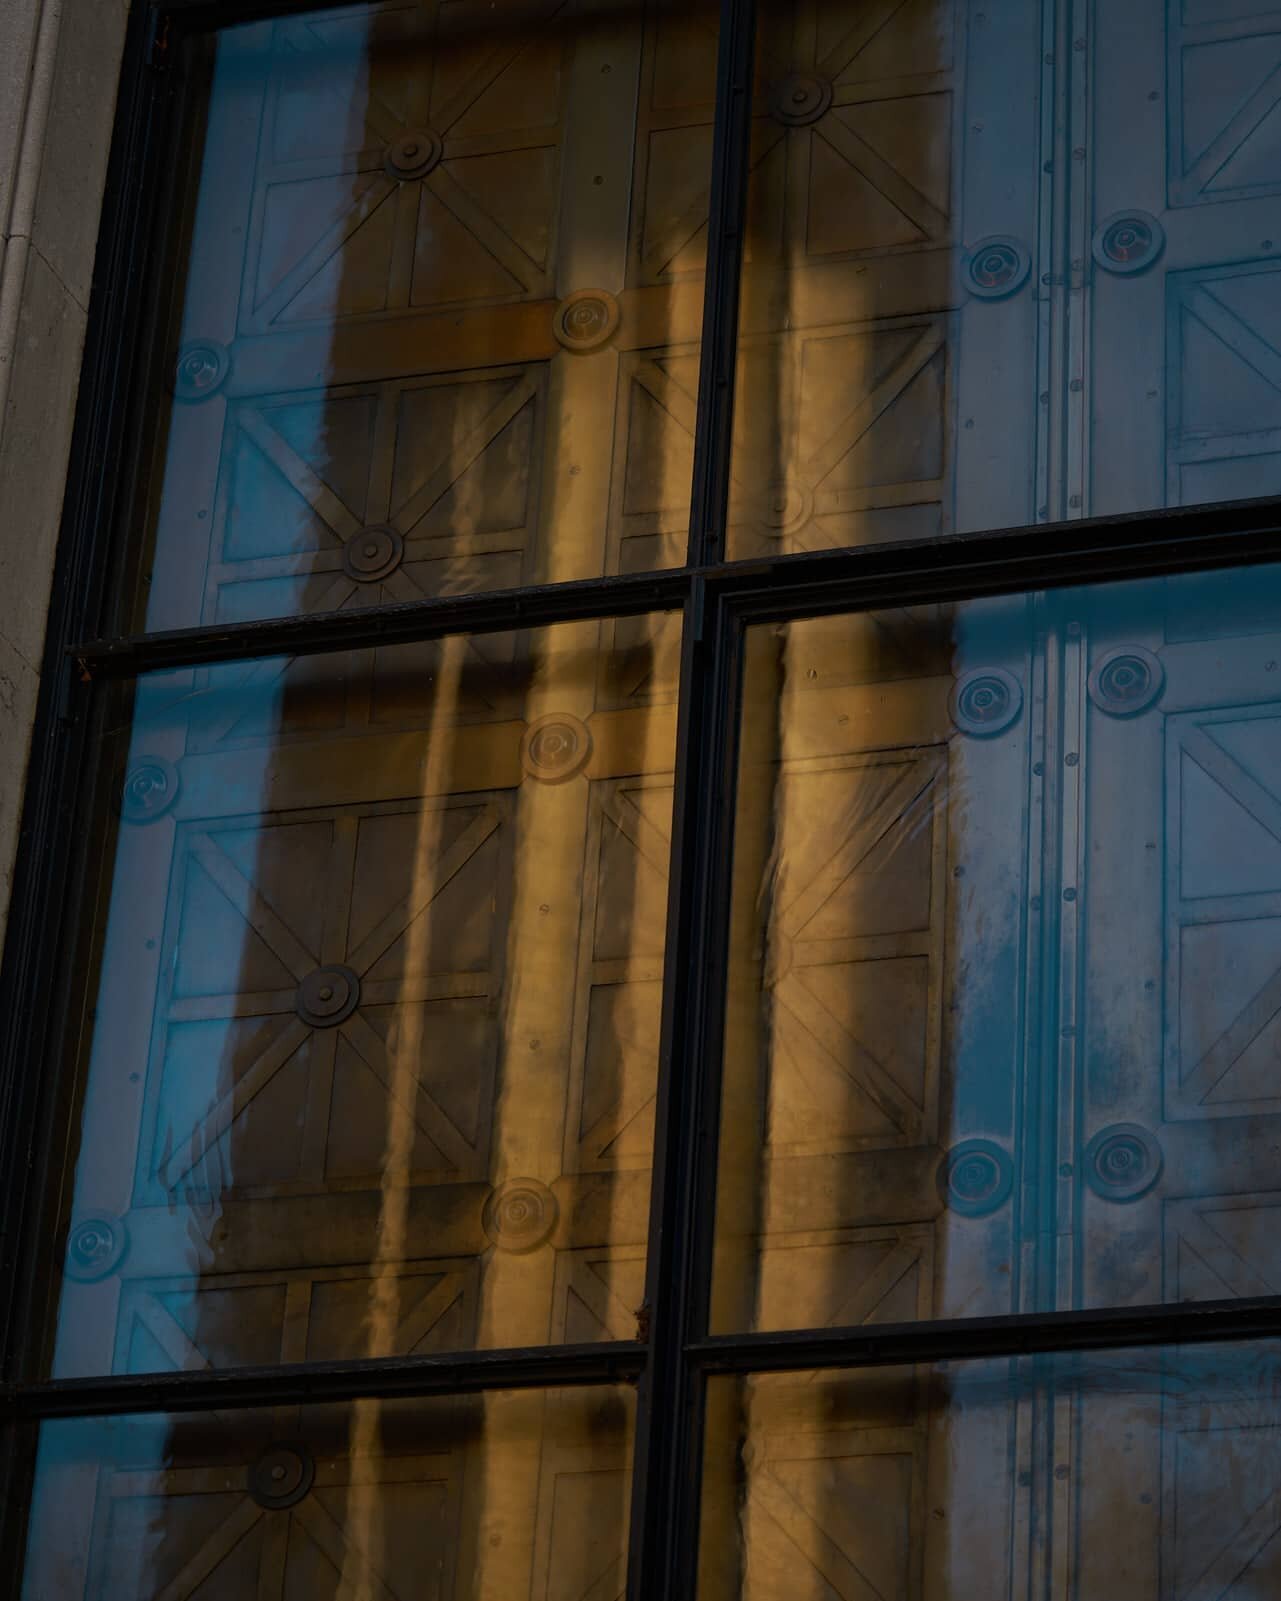 [reflection]
&bull;
&bull;
&bull;
#architecture #architecturephotos #detailphotography #walhalla #walhallaregensburg #windowreflection #moodlight #eveninglight #photographs #regebsburg #bavaria #munich